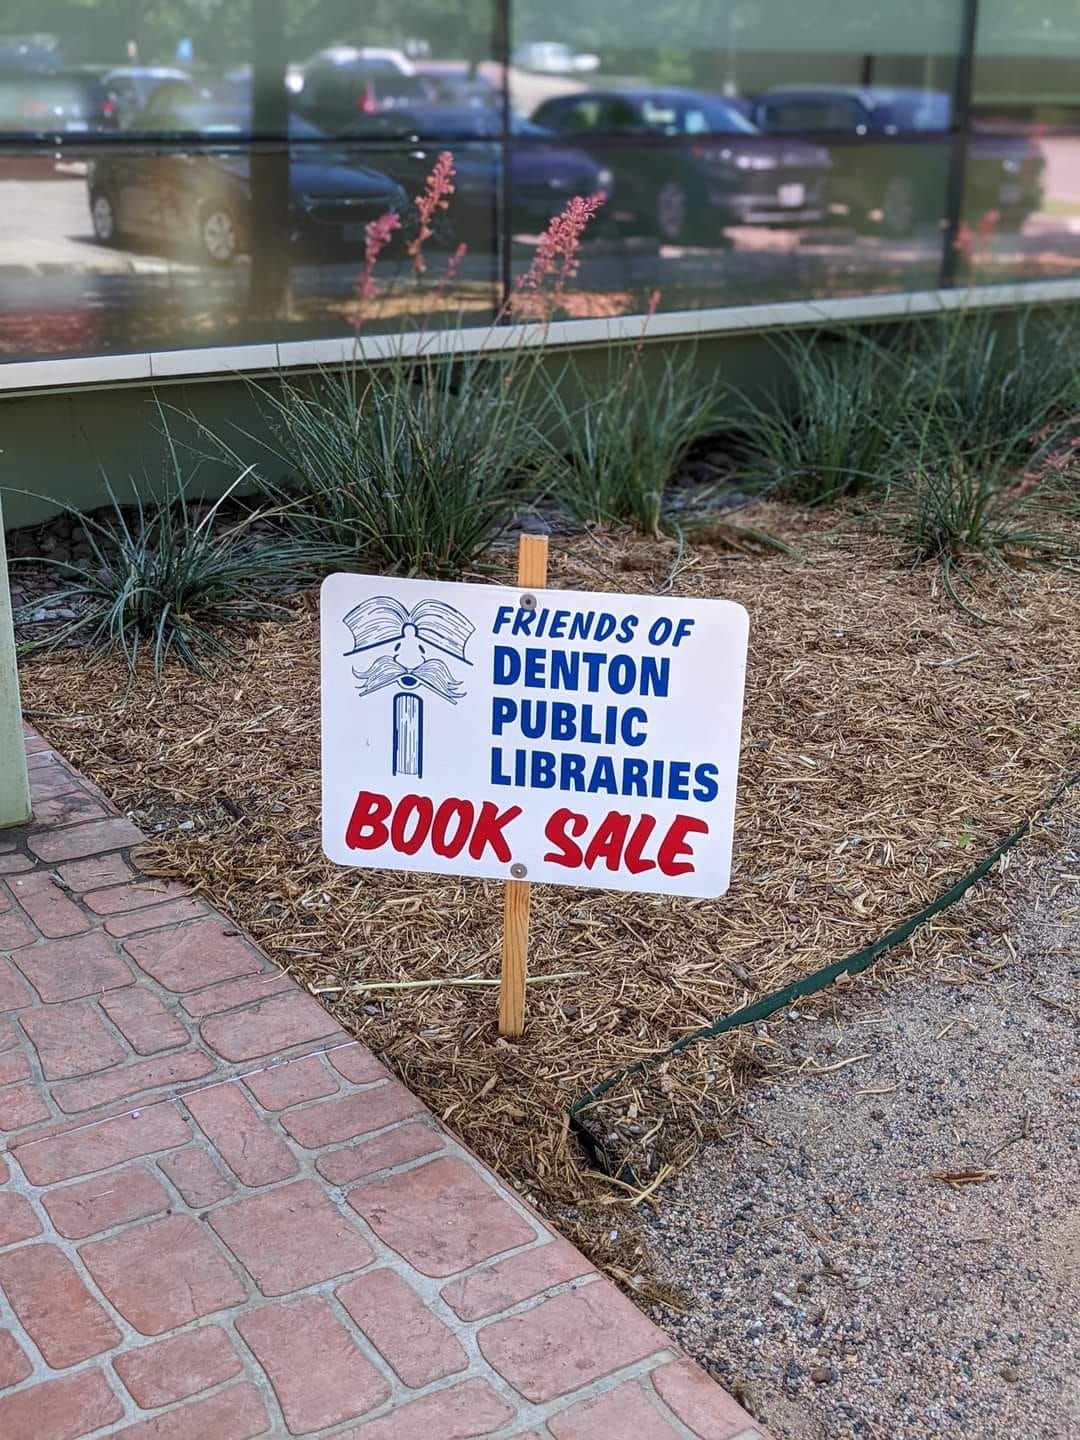 Big Book Sale